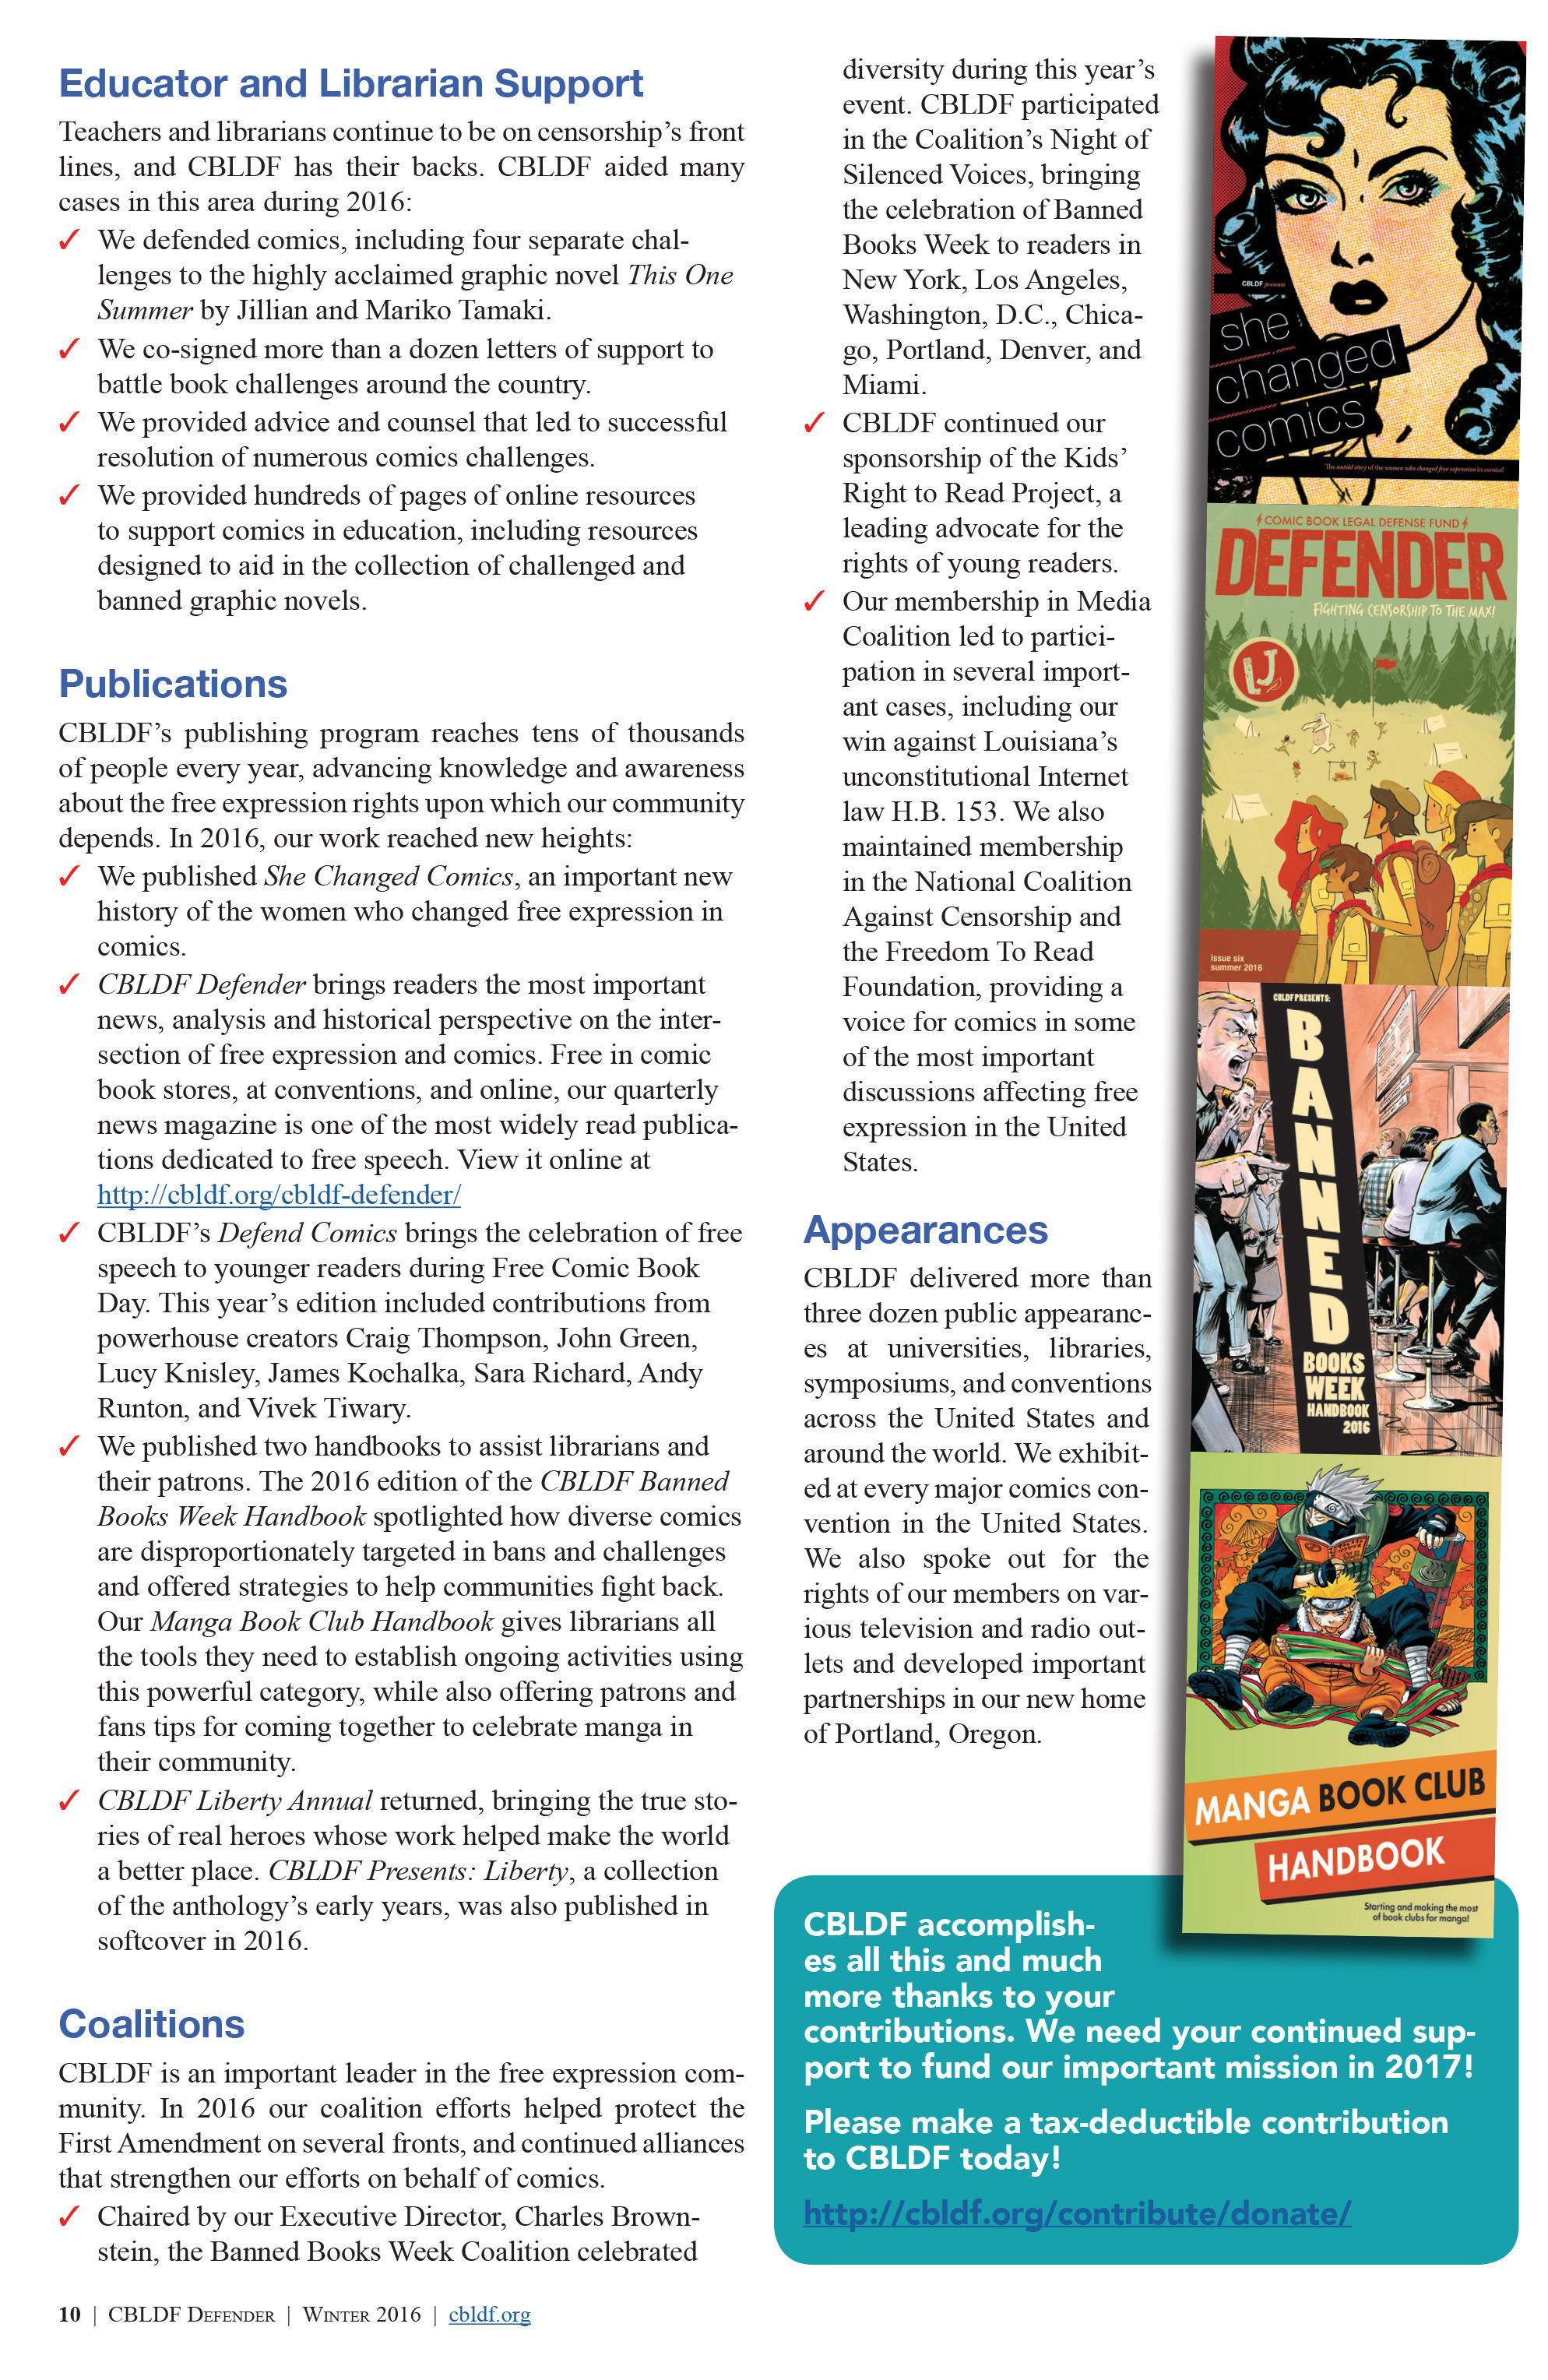 Read online CBLDF Defender comic -  Issue #8 - 10